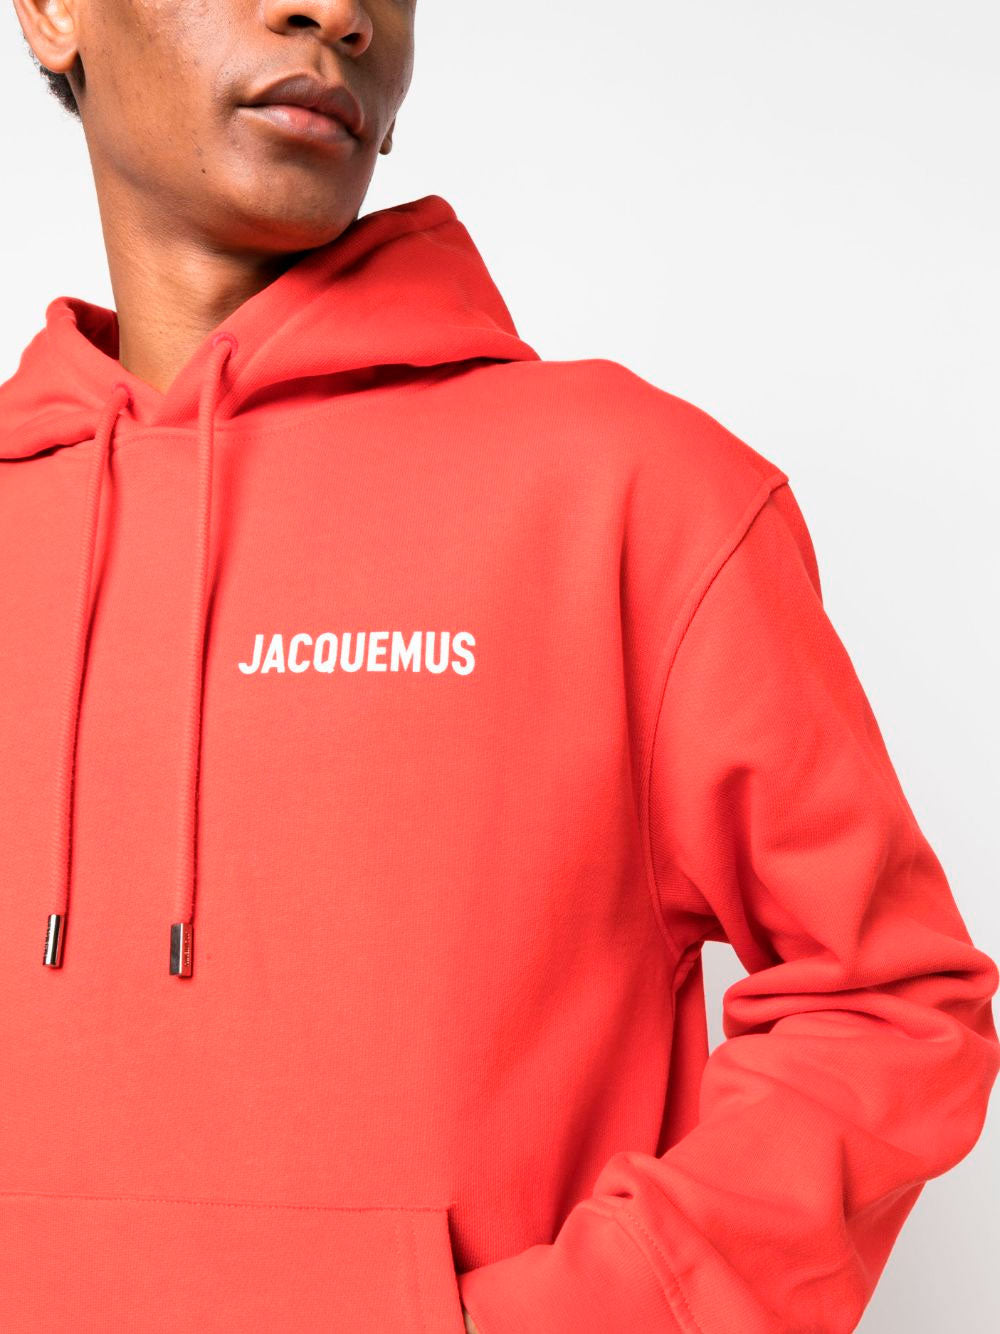 Jacquemus sweatshirt